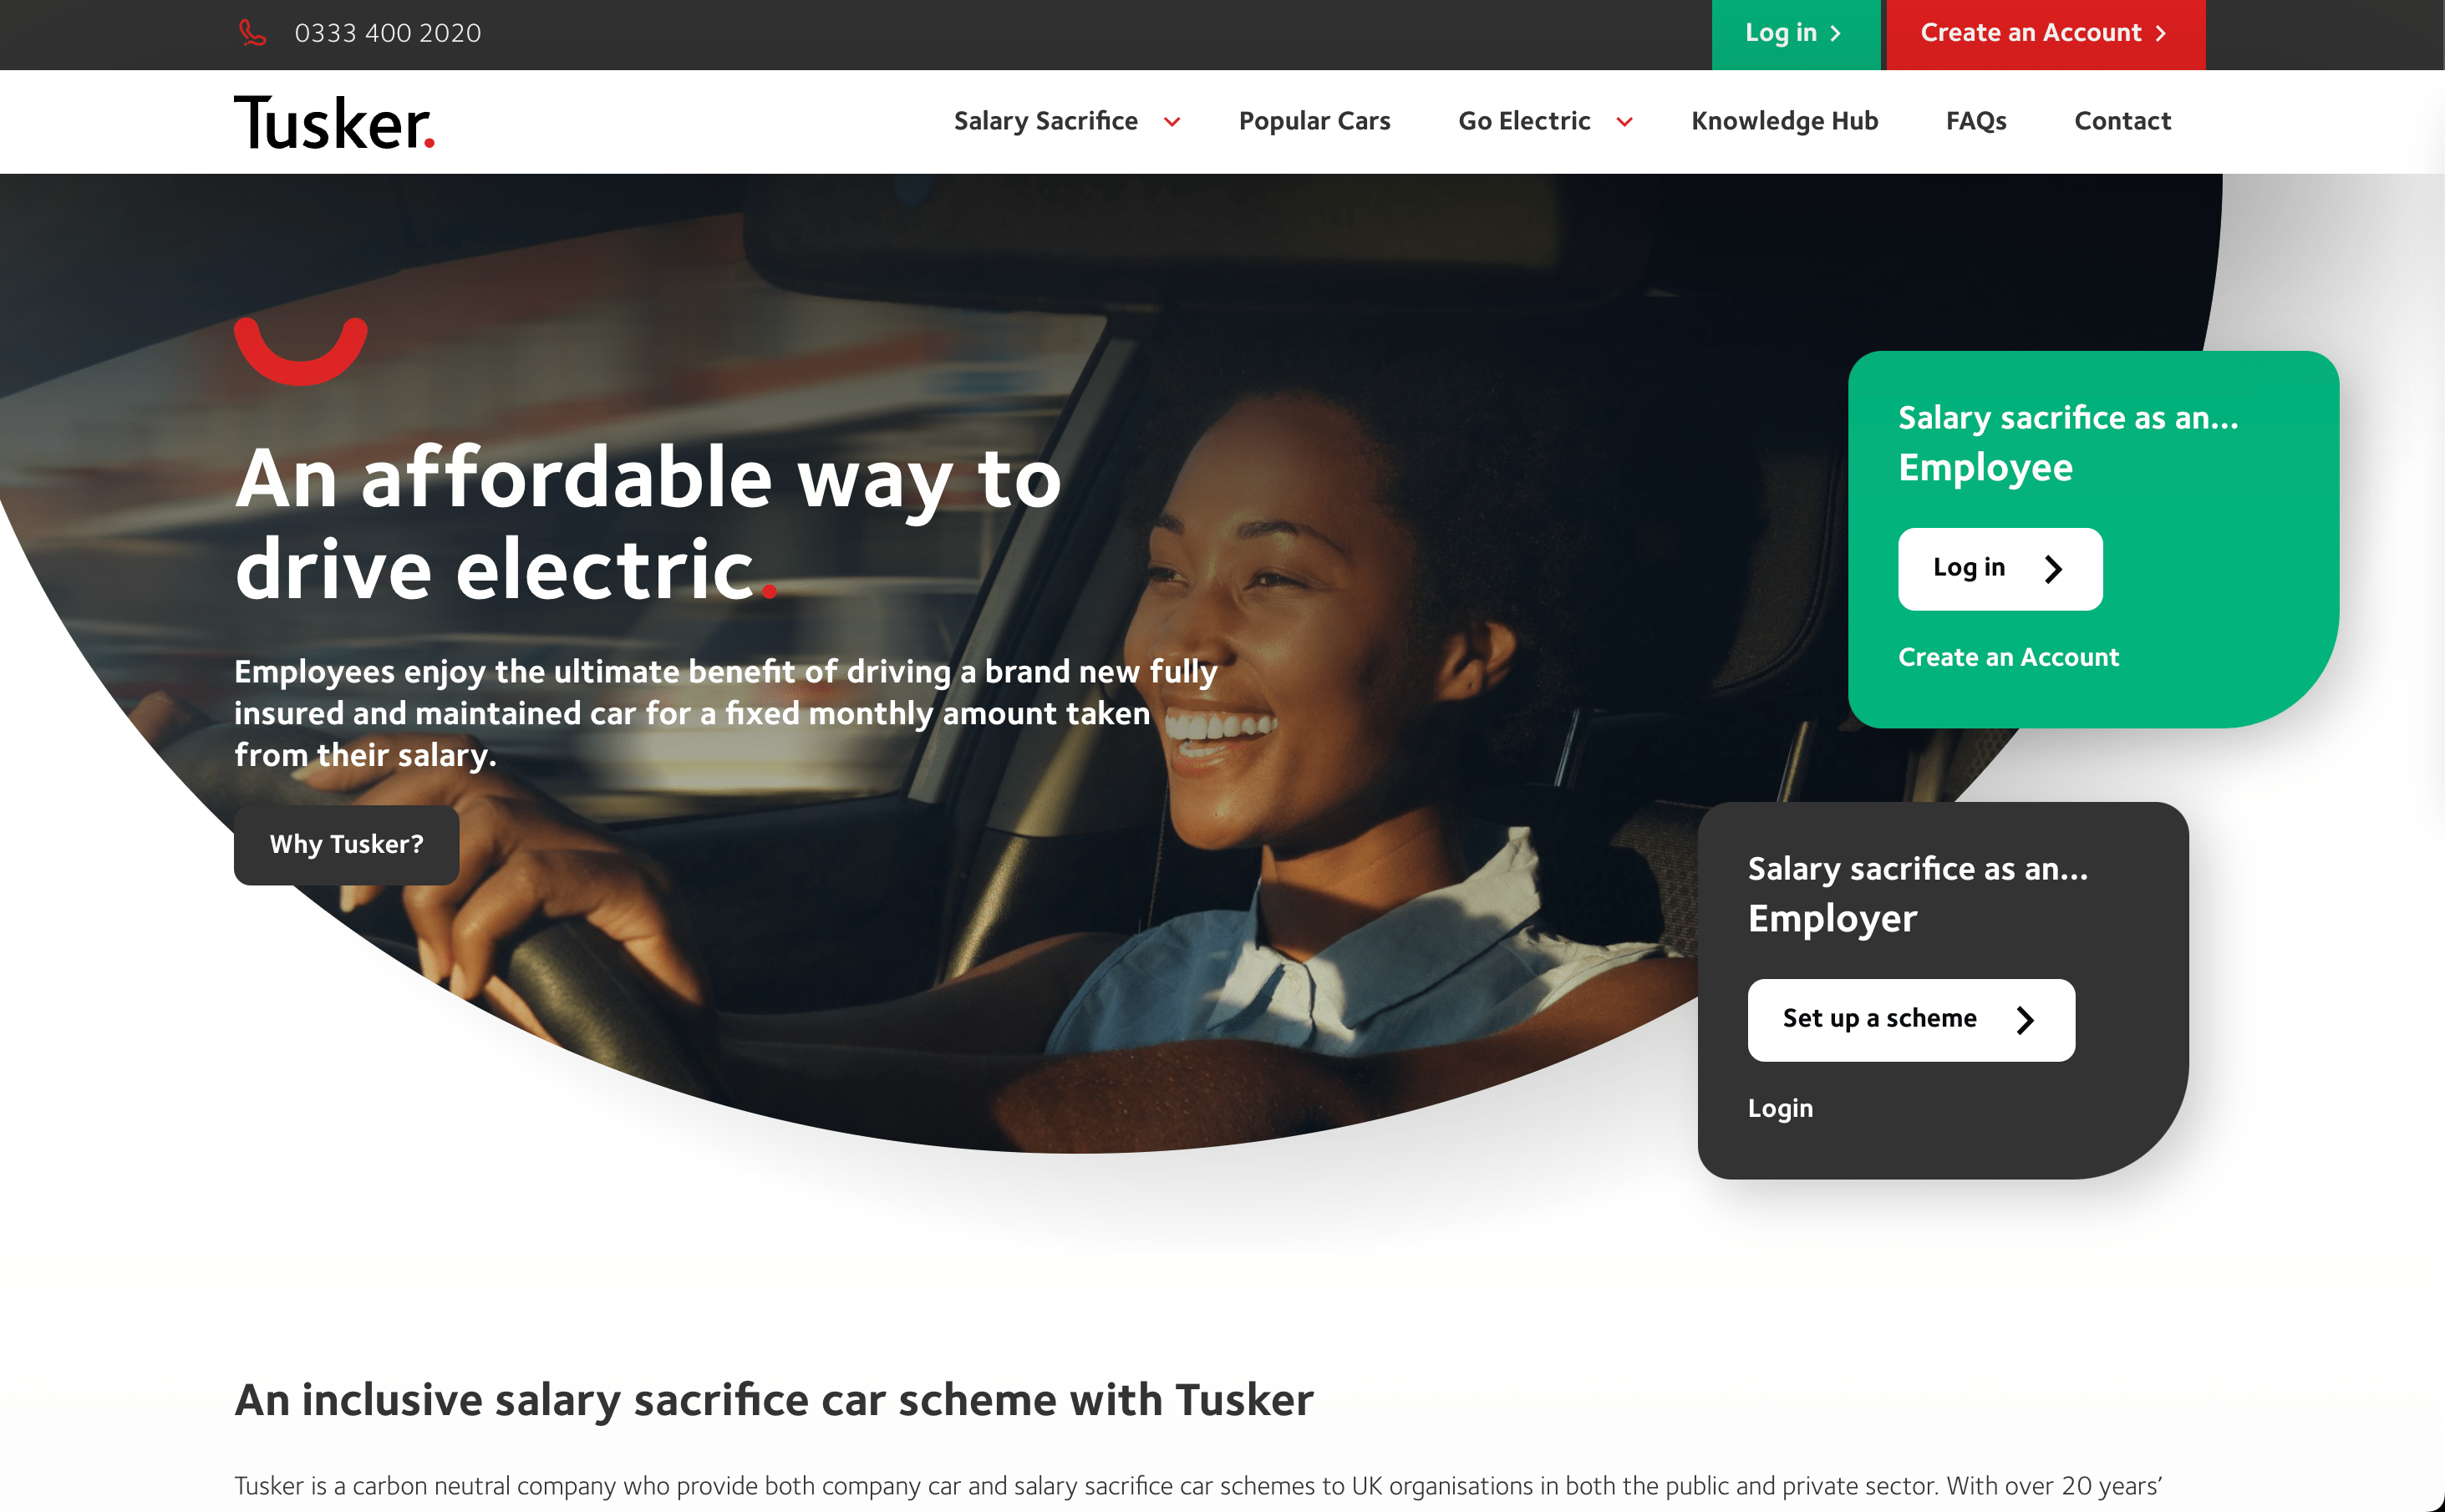 Image of Tusker's website